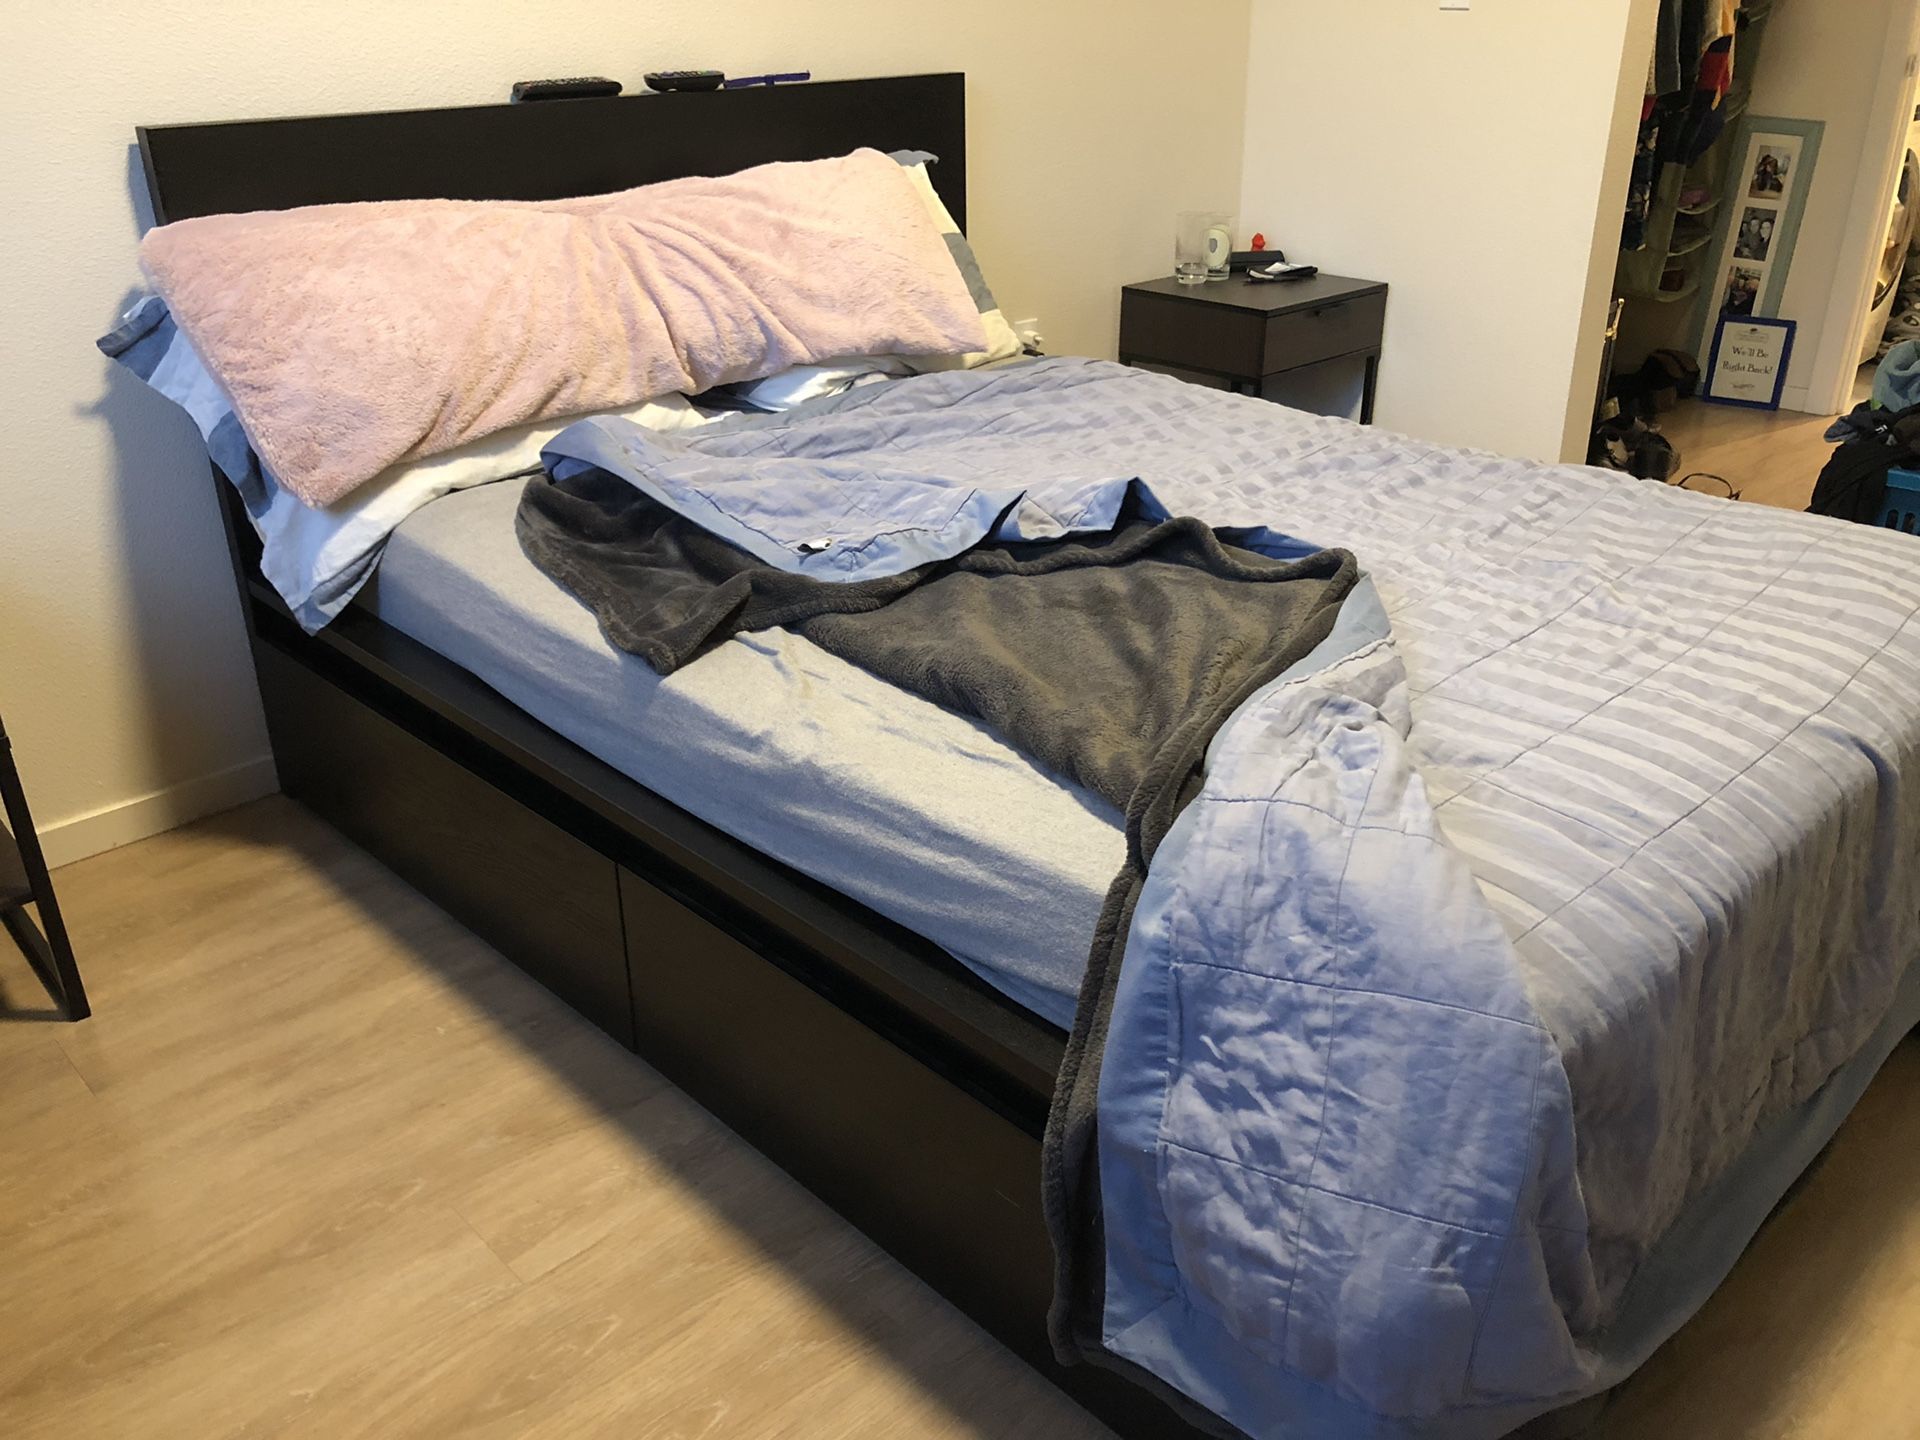 IKEA full sized Malm bed